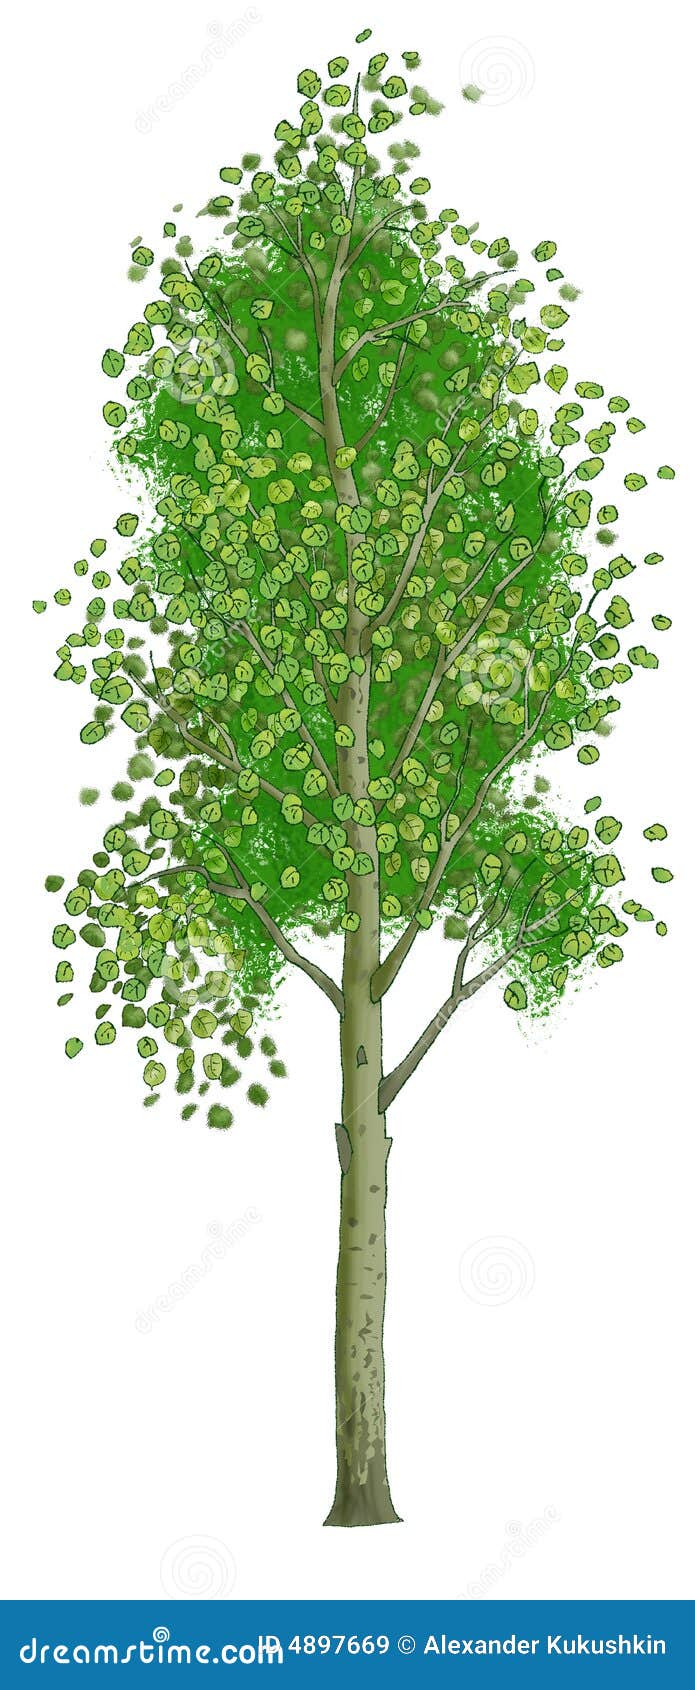 aspen tree clip art images - photo #42